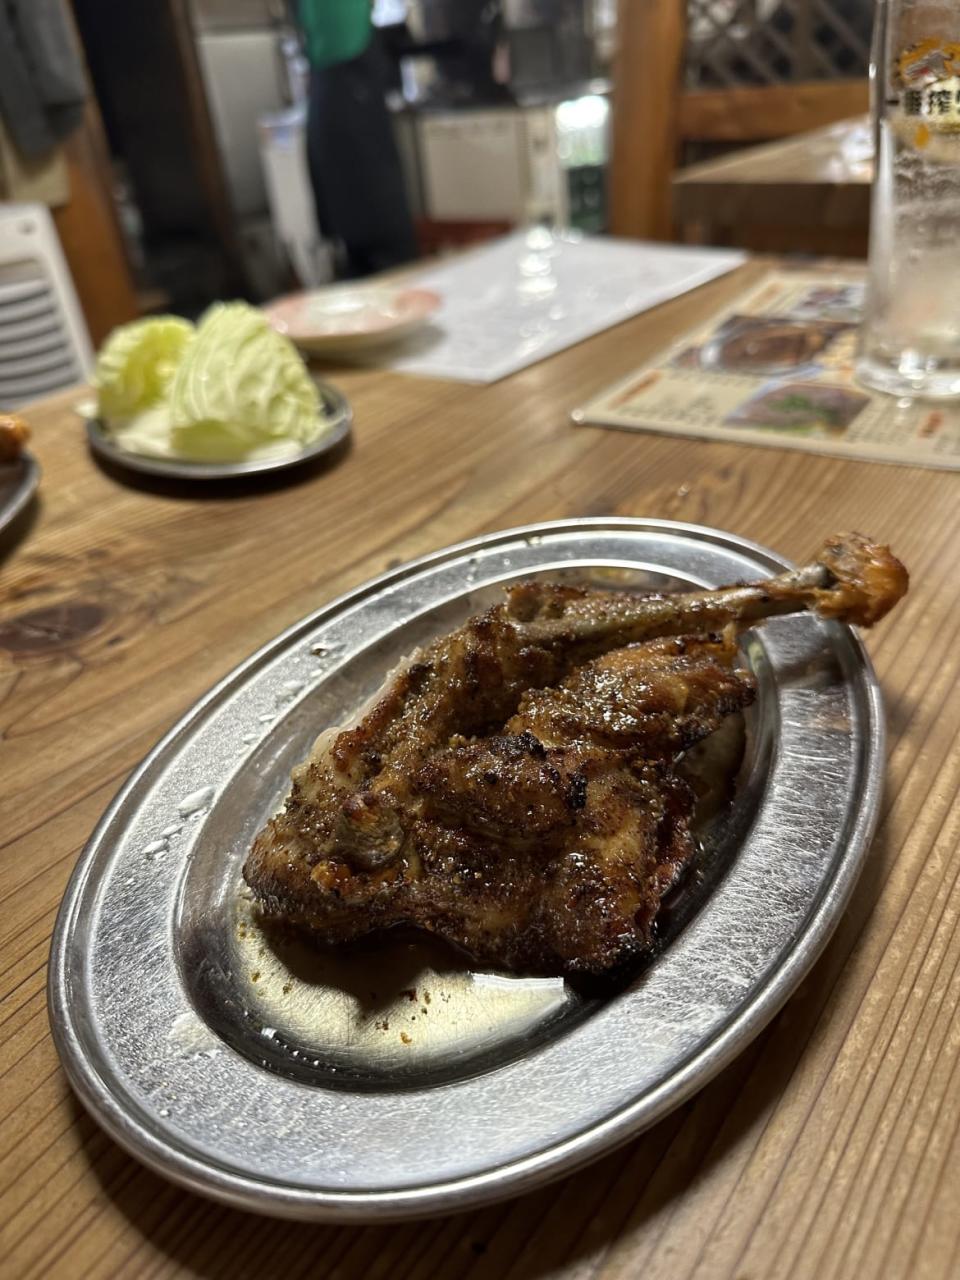 <div class="inline-image__caption"><p>Honetsukidori, or bone-in chicken, at Ranmaru in Takamatsu, Japan.</p></div> <div class="inline-image__credit">Andrew Kirell for The Daily Beast</div>